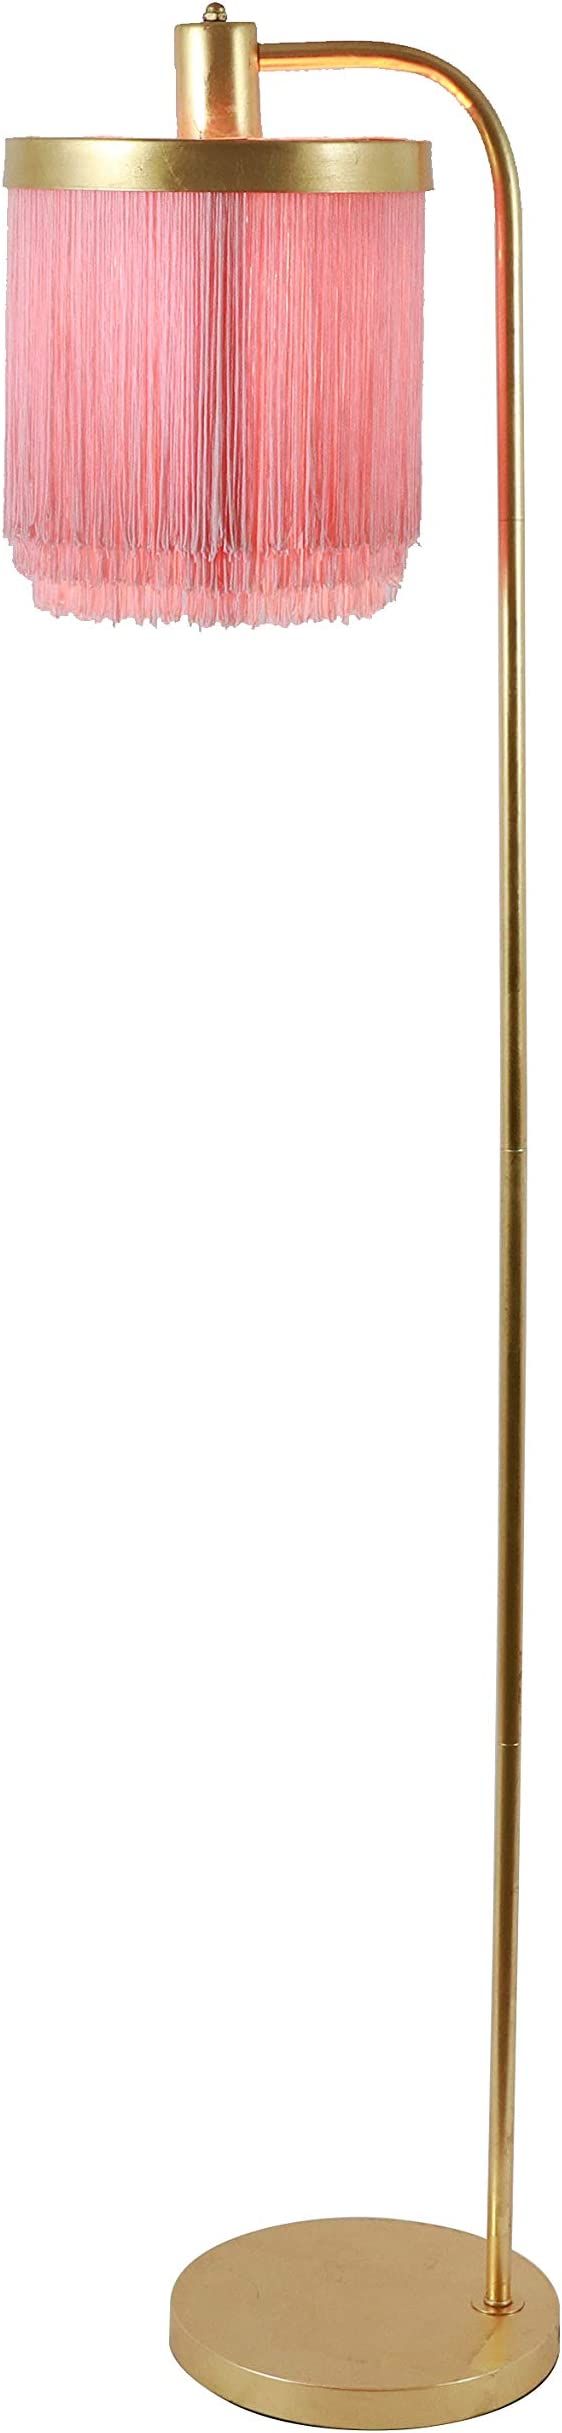 Decor Therapy PL4341 Framboise Fringe Shade Floor Lamp, Gold Leaf with Pink Shade | Amazon (US)